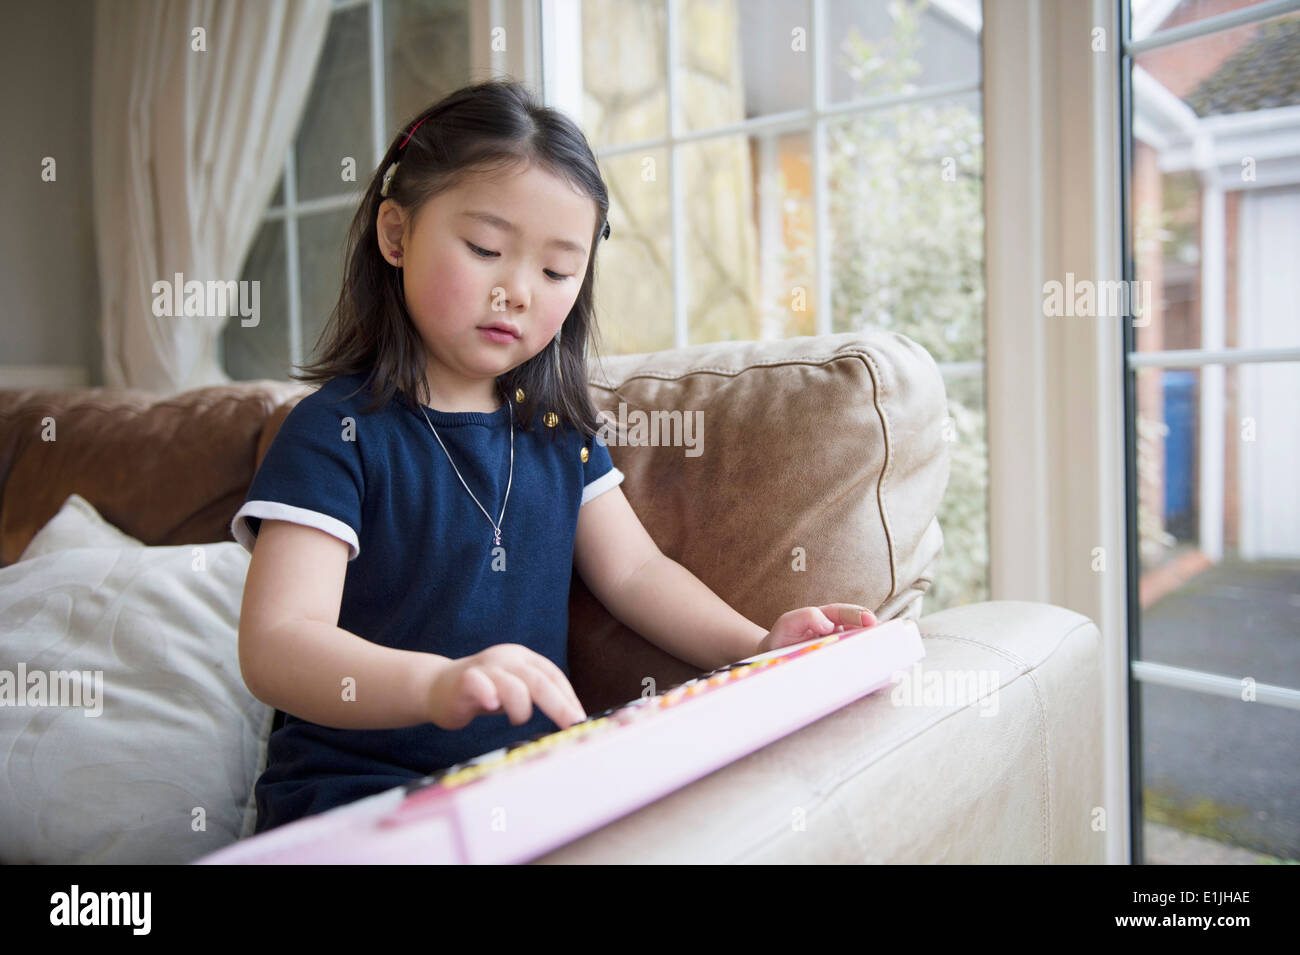 Girl playing toy keyboard Stock Photo